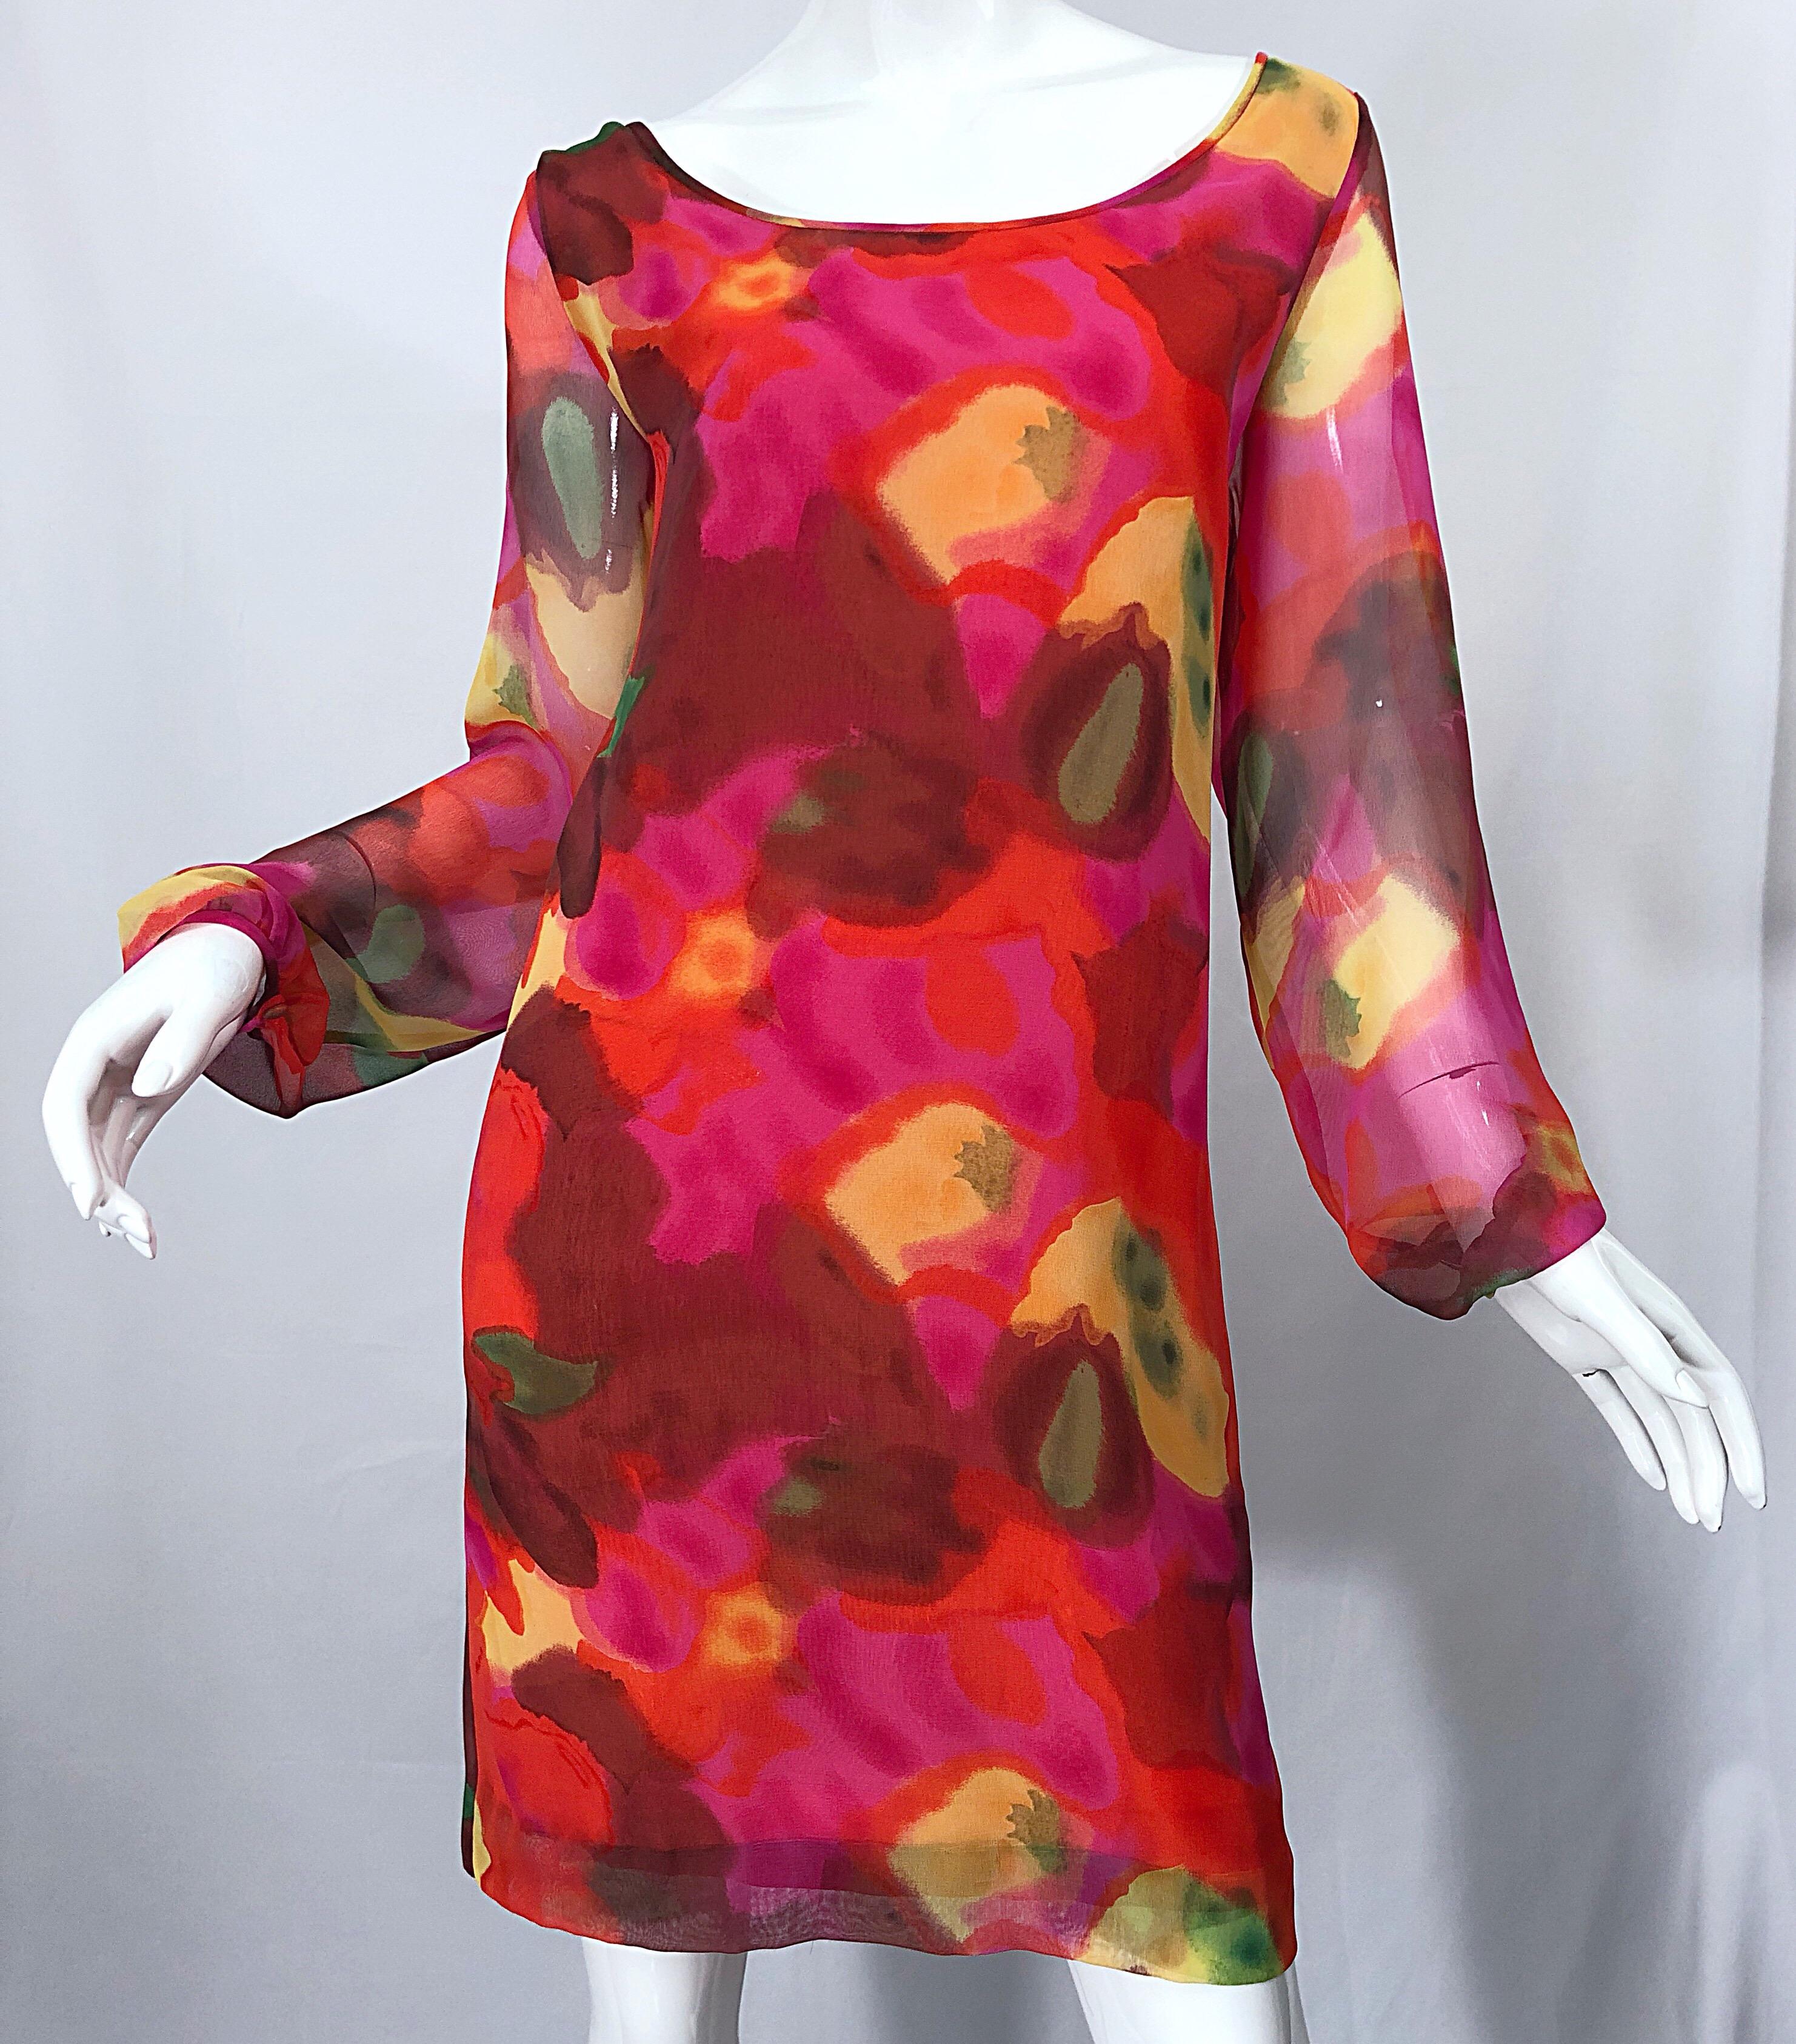 Vintage Elizabeth Arden Silk Chiffon 1960s Style Hot Pink Watercolor Dress For Sale 6